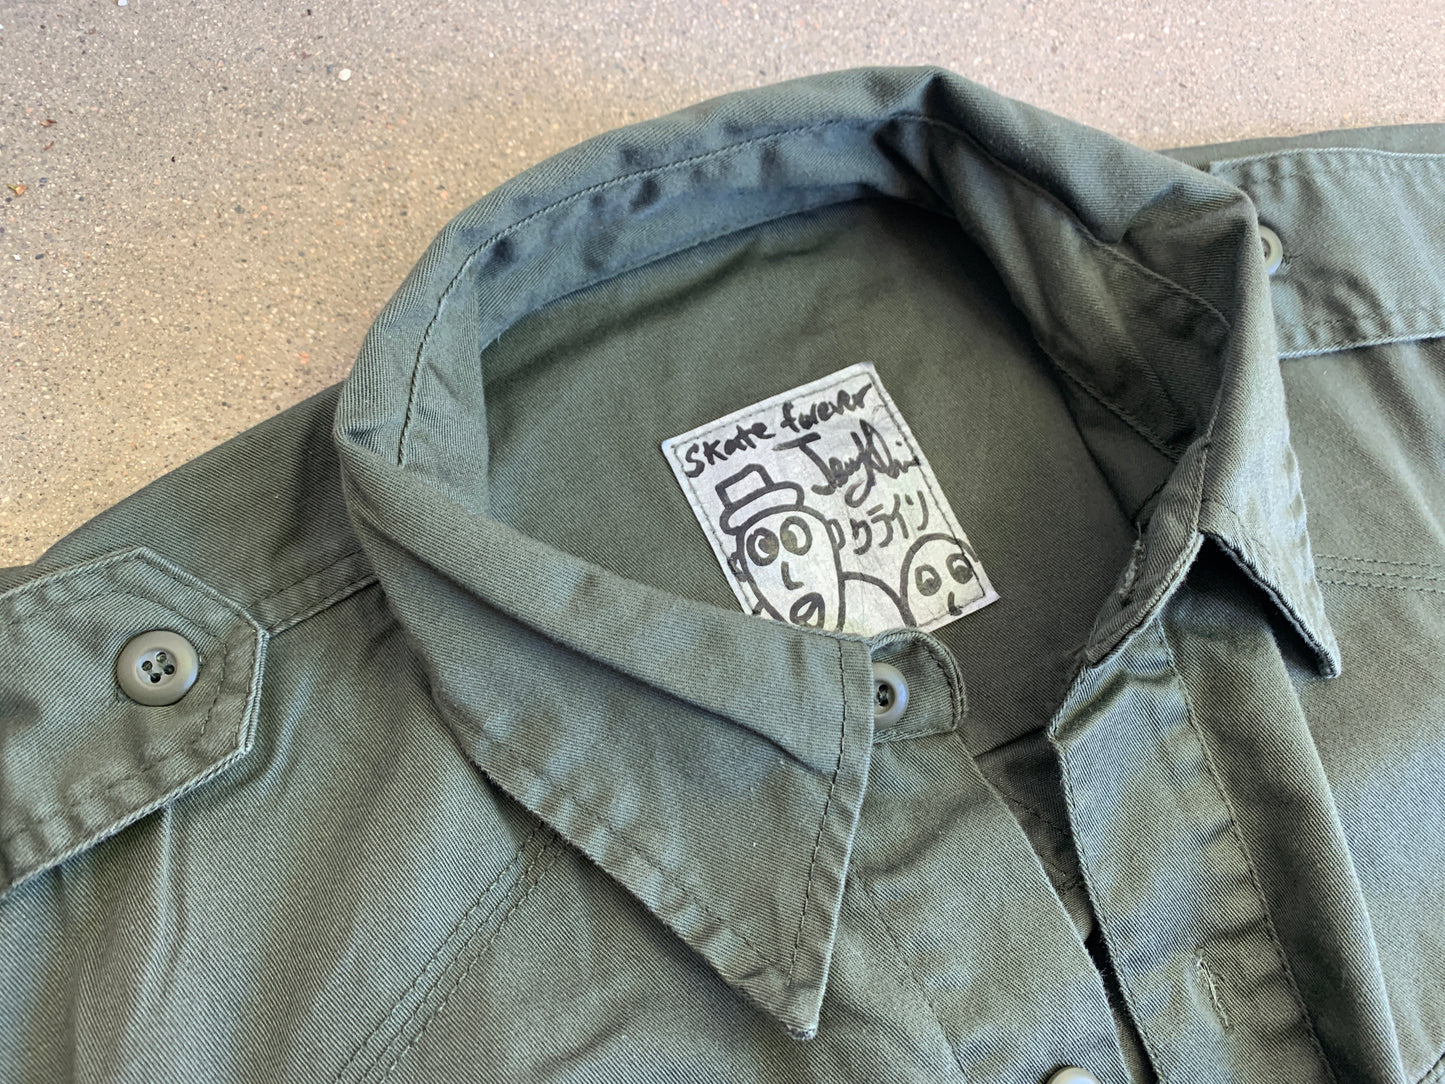 jk industries military jacket GREEN